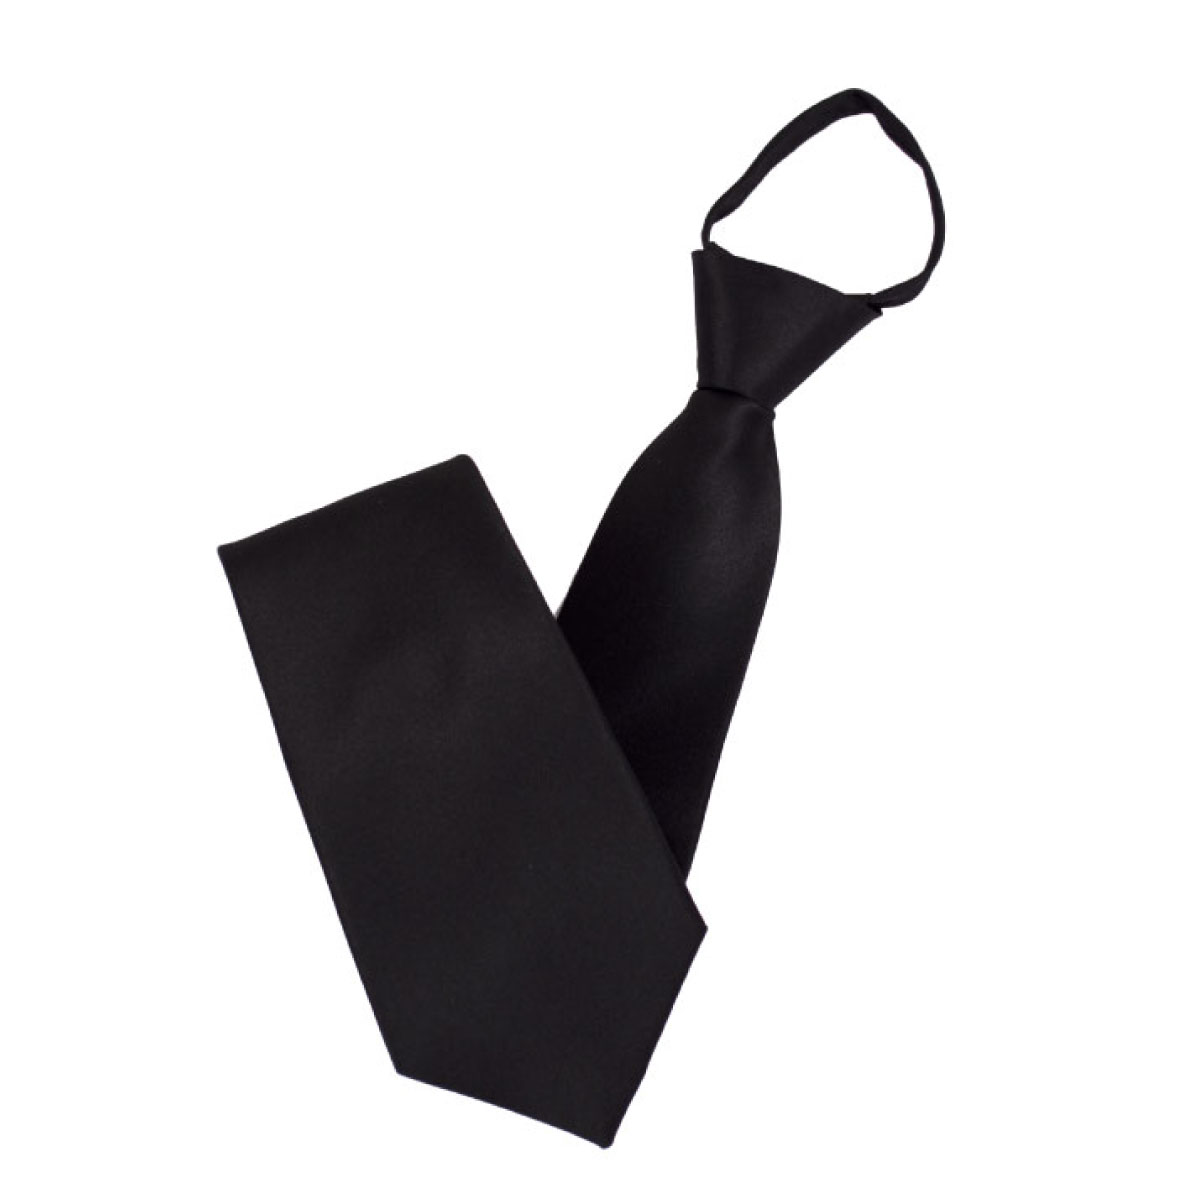  necktie . equipment black one touch zipper type easy necktie formal .. memorial service through night funeral ... O-Bon ... plain convenience easy r101